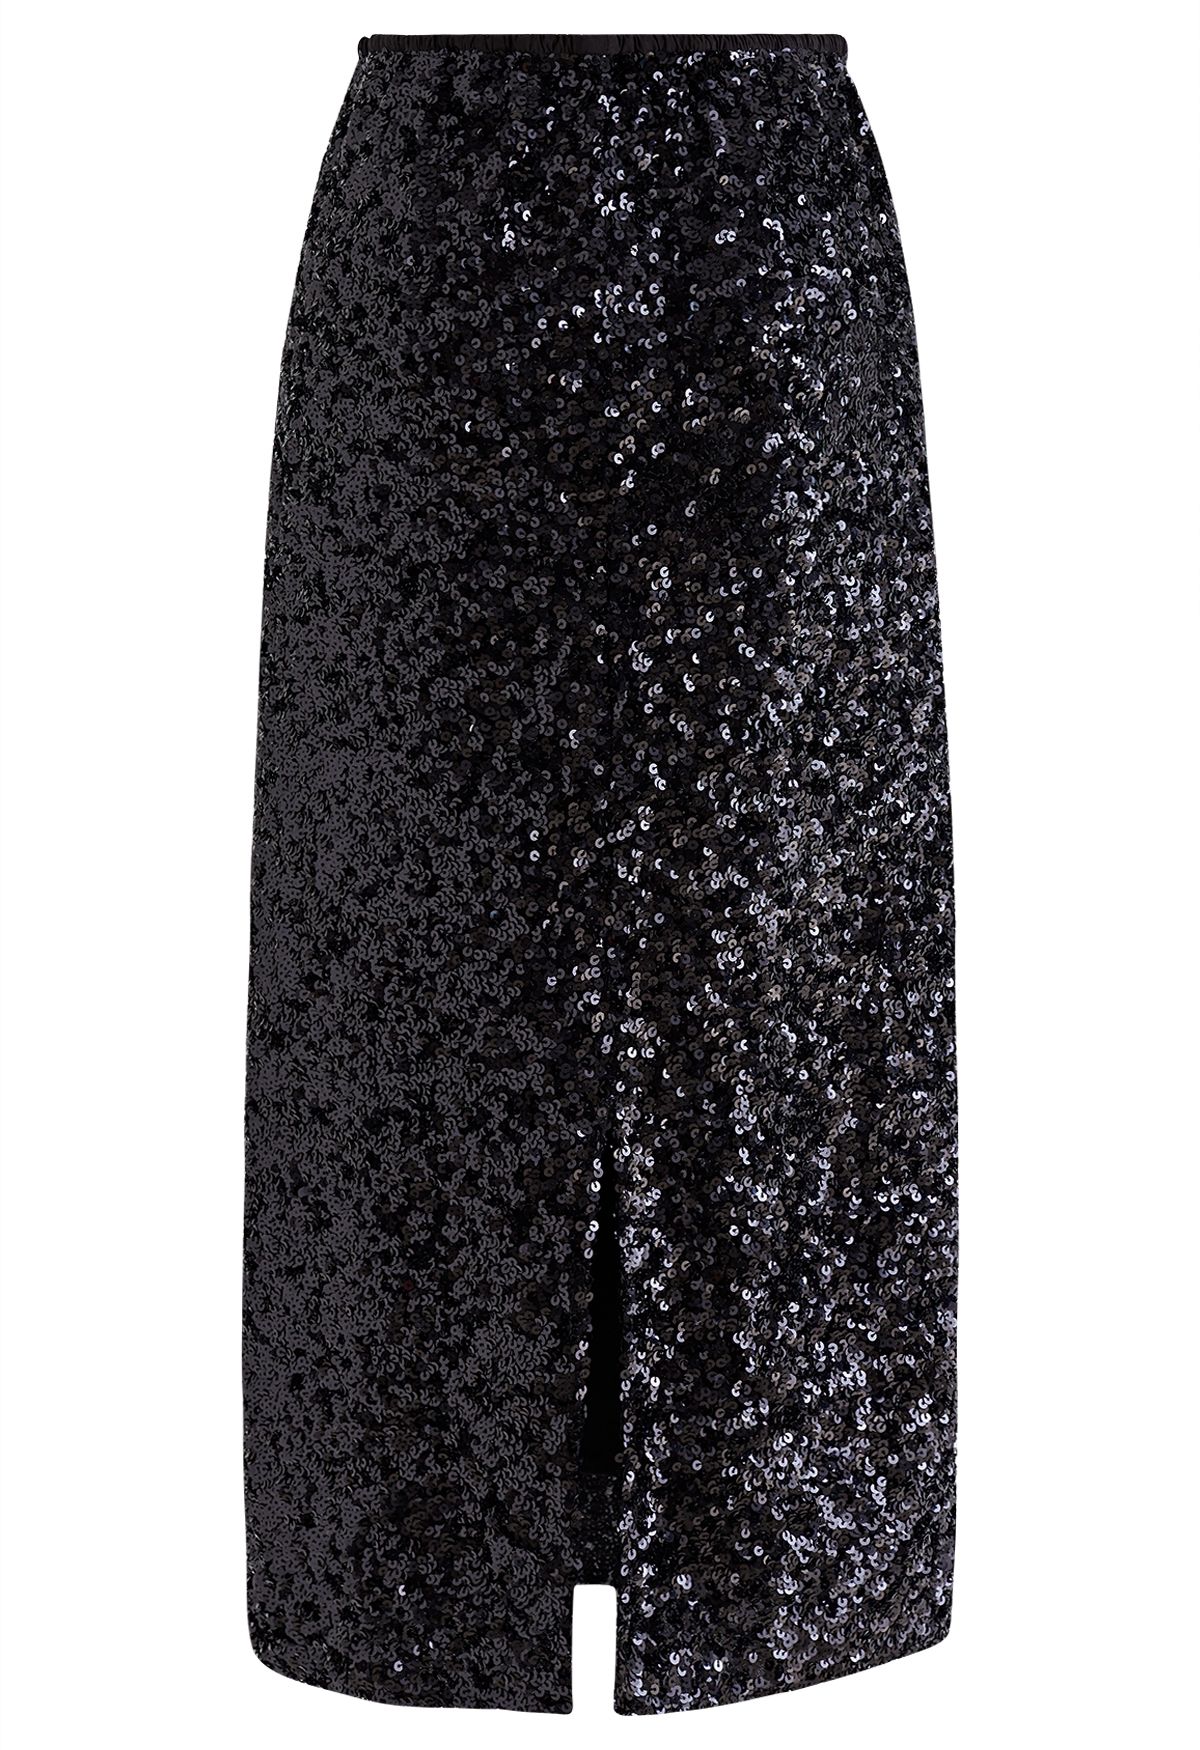 Iridescent Sequin Embellished Pencil Skirt in Black